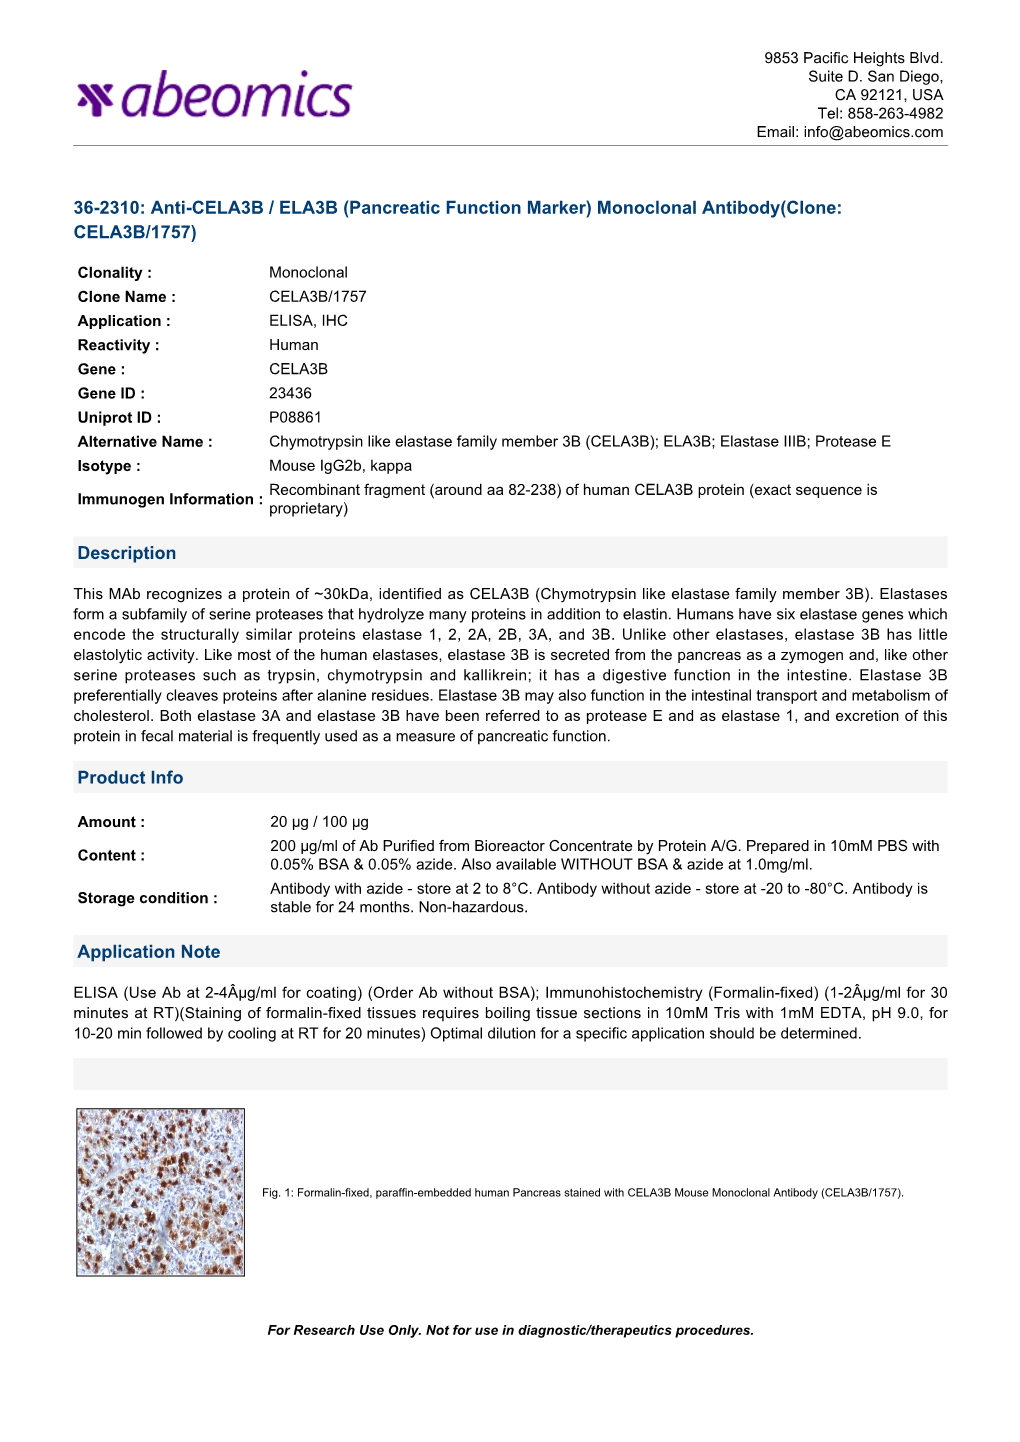 Monoclonal Antibody(Clone: CELA3B/1757)